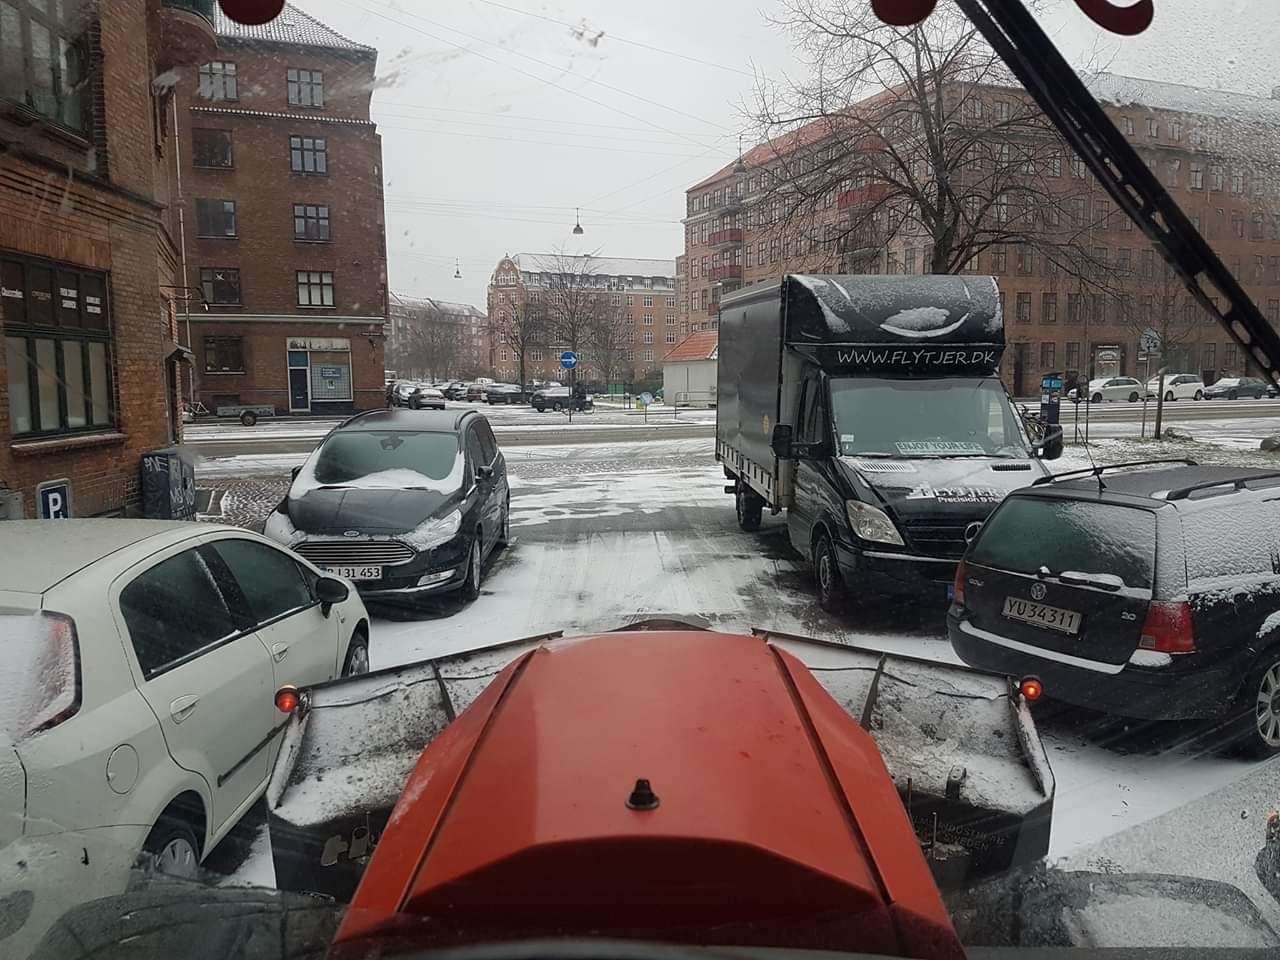 sne-rydning, Sjælland